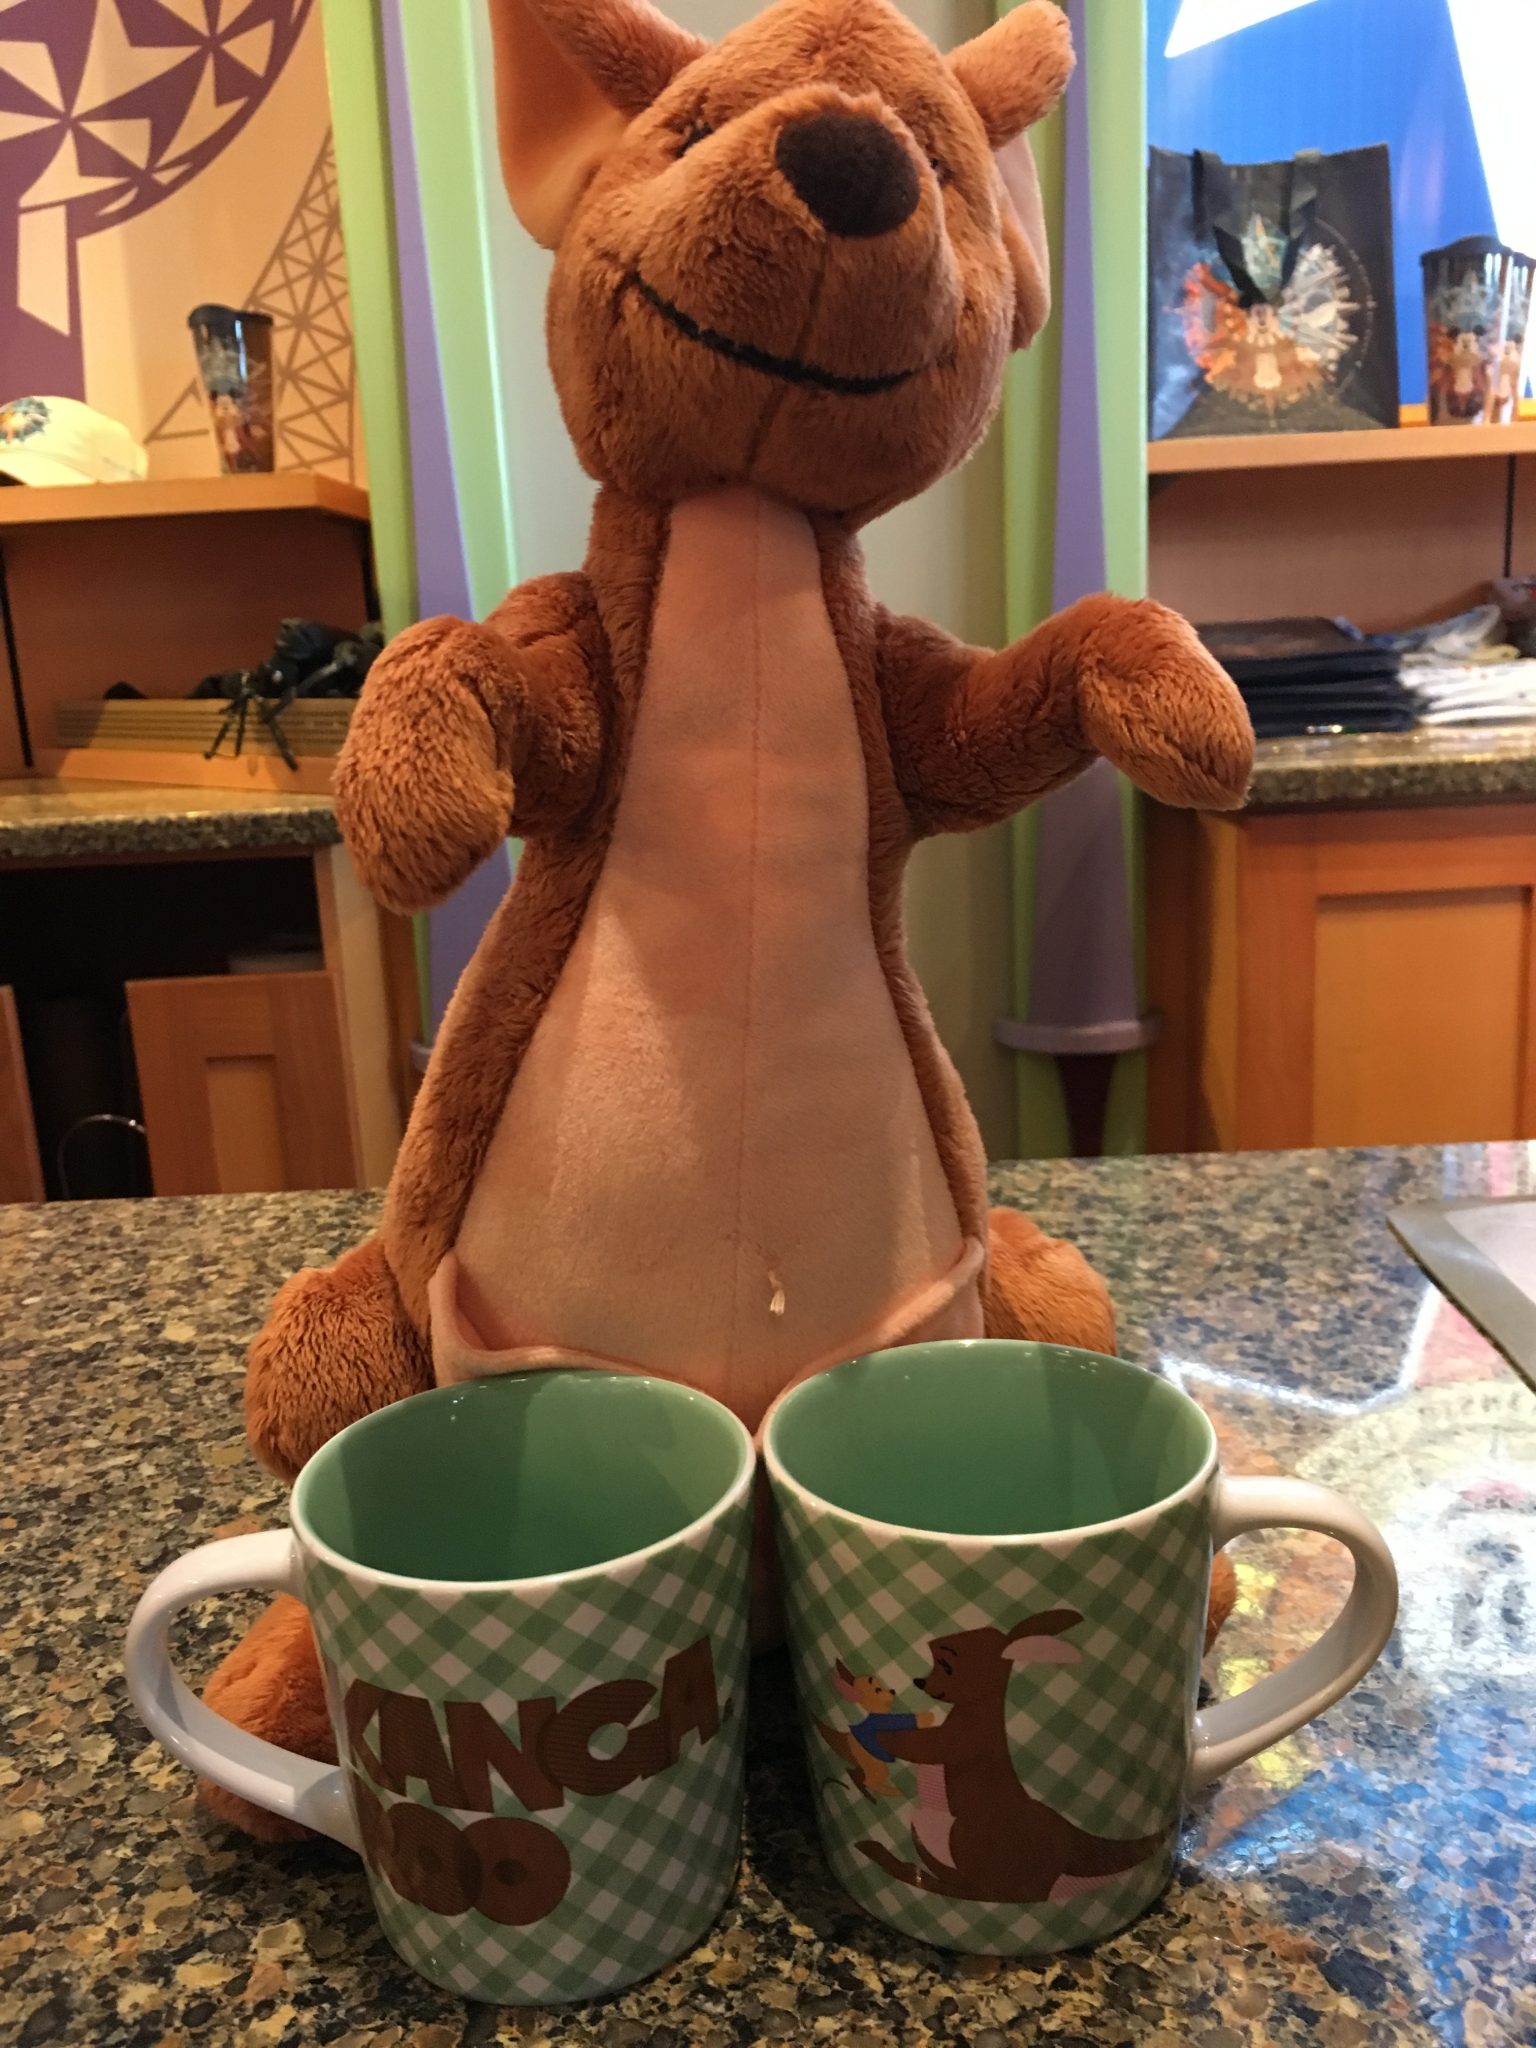 A stuffed Kanga with Kanga and Roo coffee mugs in World of Disney.